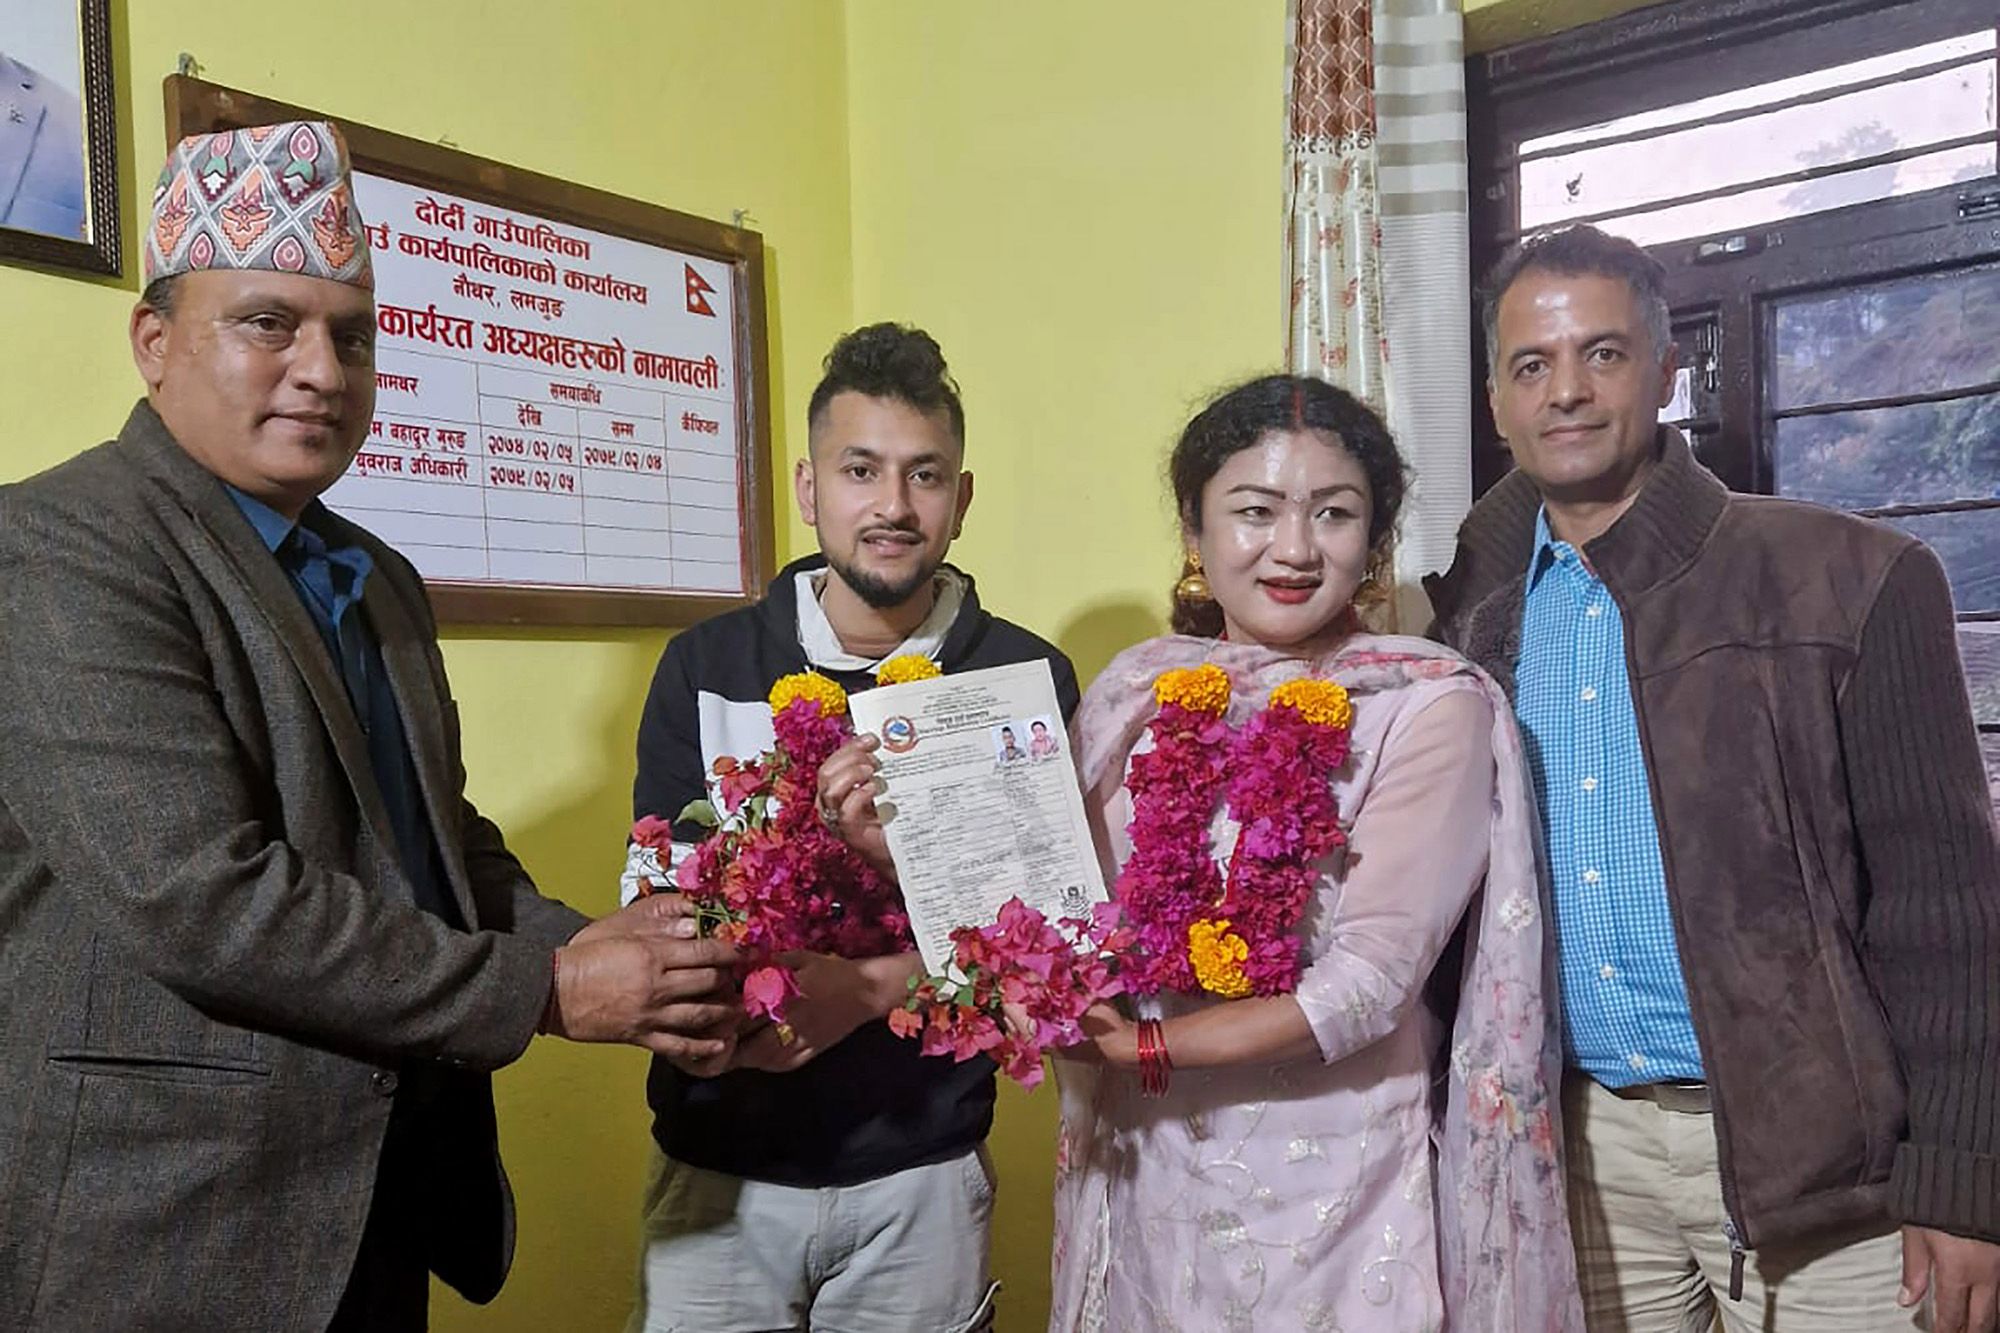 Nepali Sleeping Sex - Nepal registers its first same-sex marriage | CNN